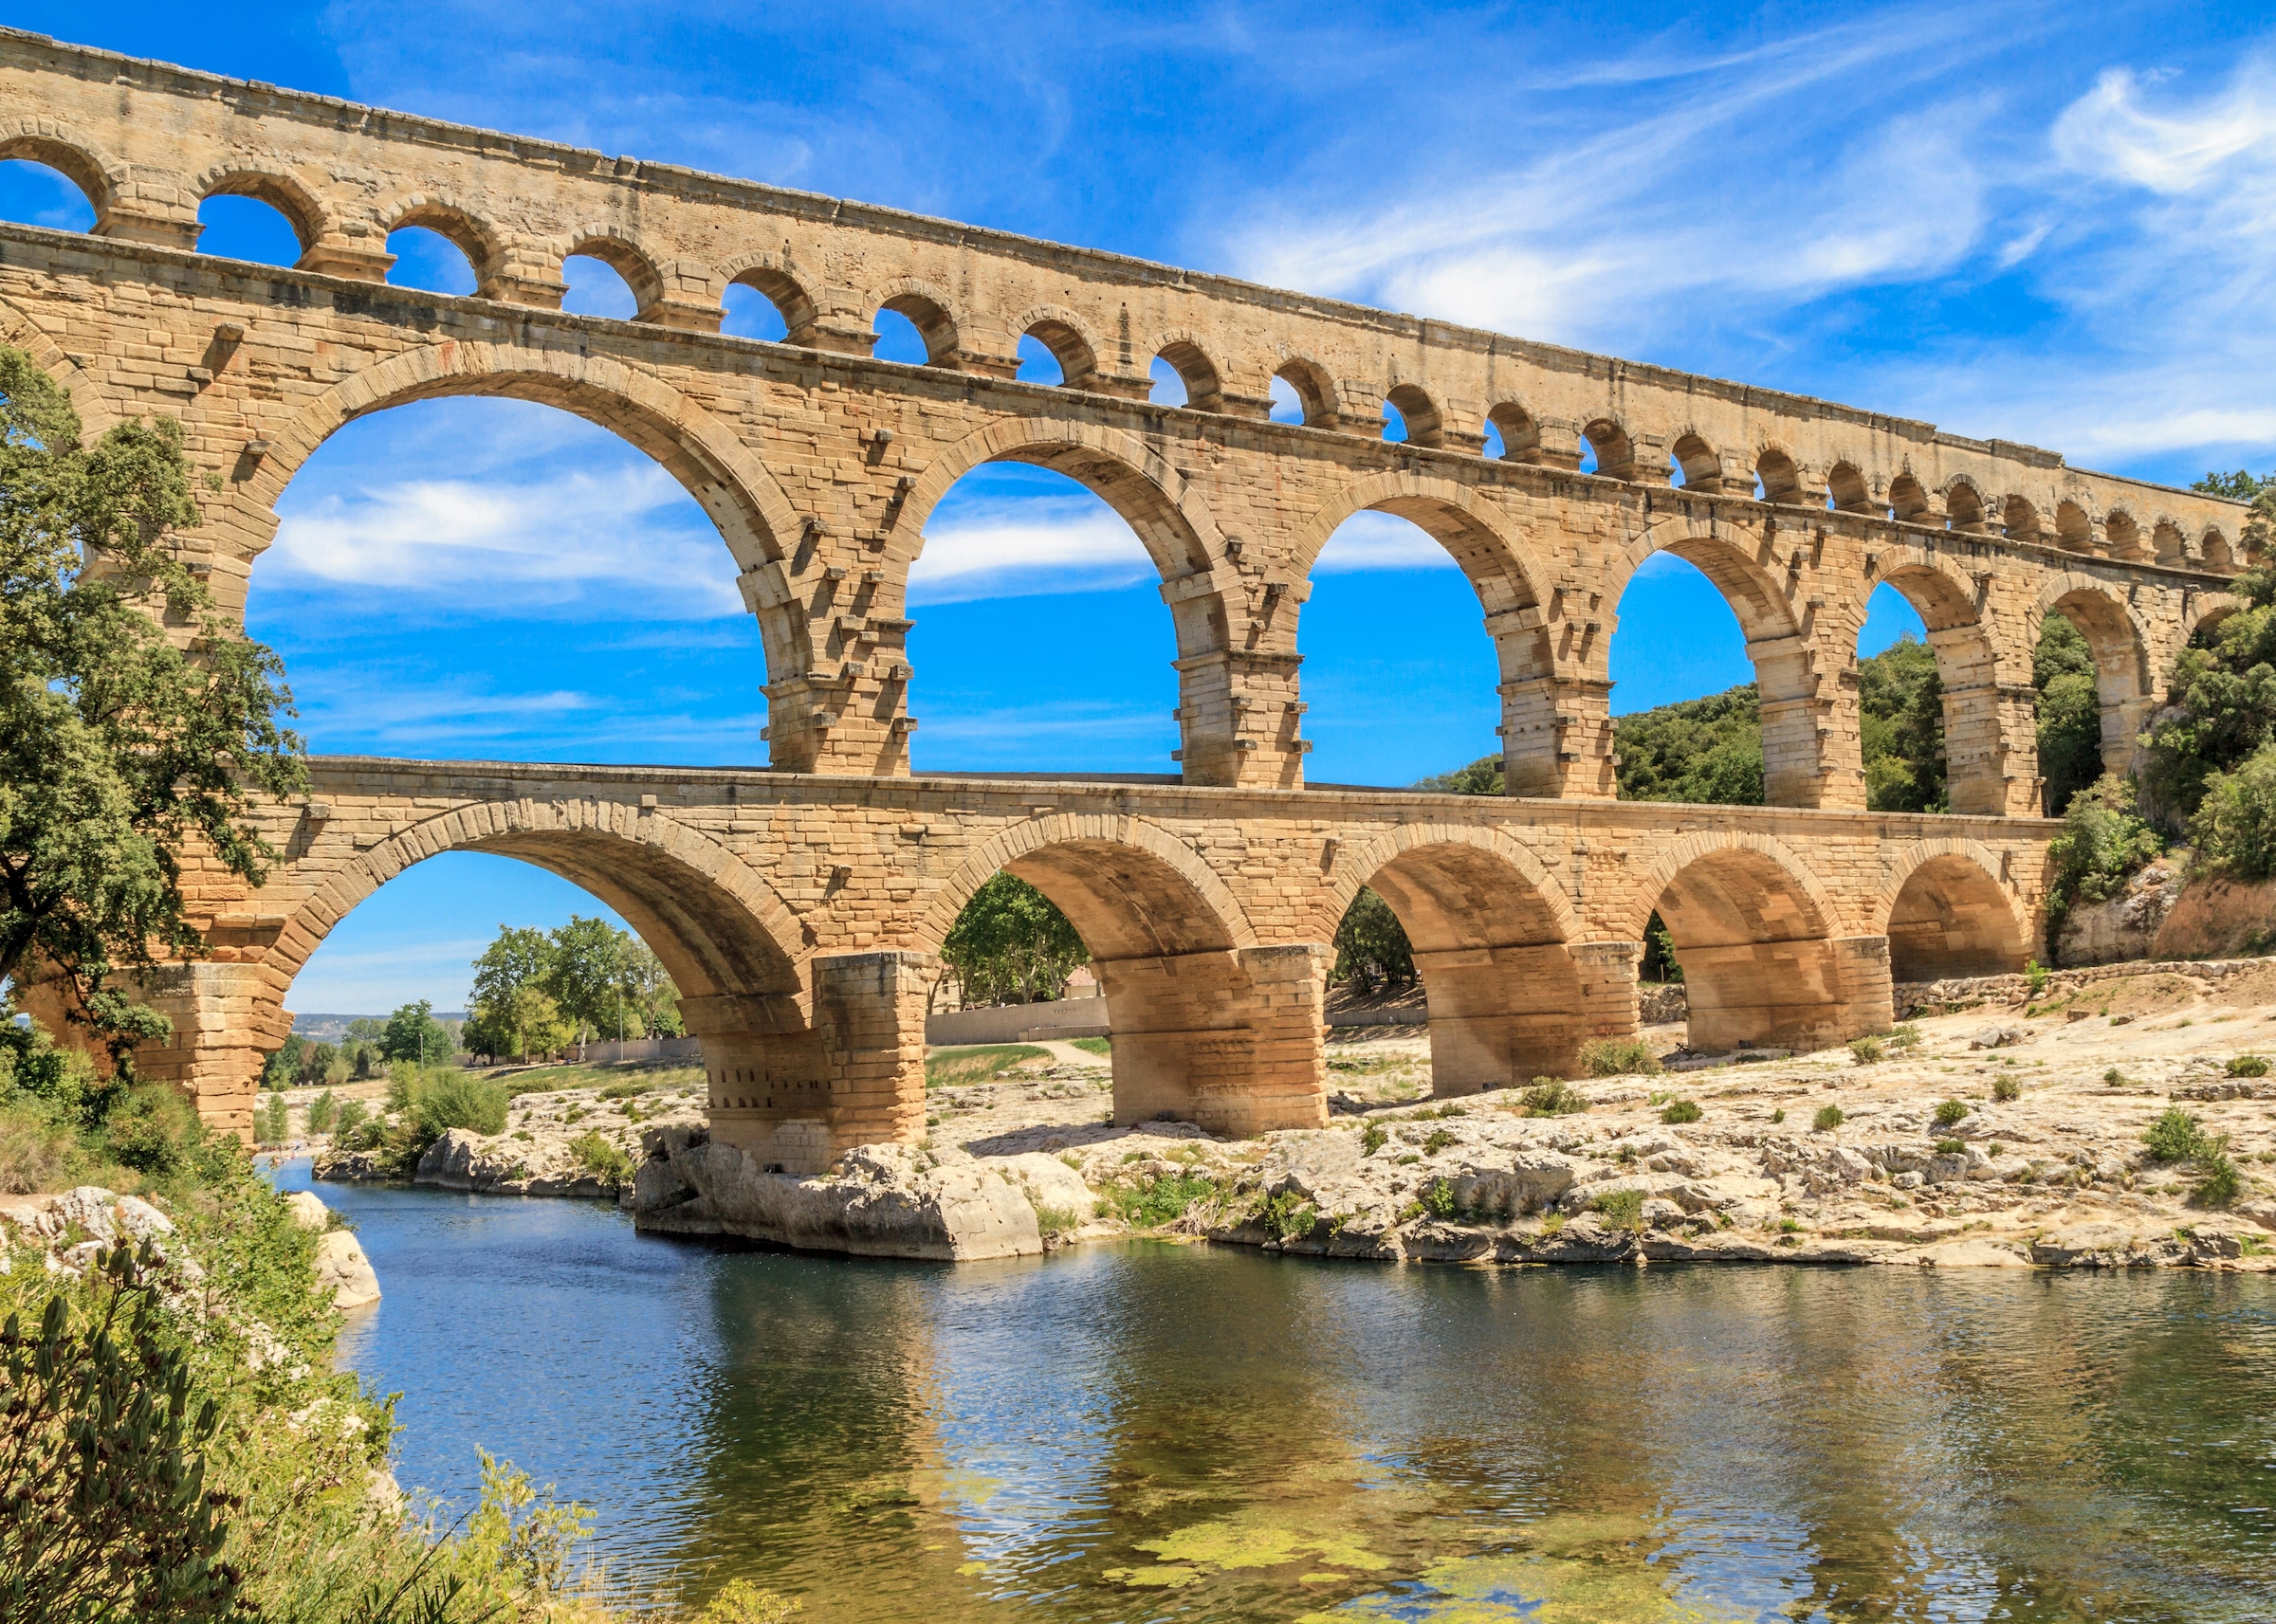 Fototapete »Pont du Gard Aqueduct«